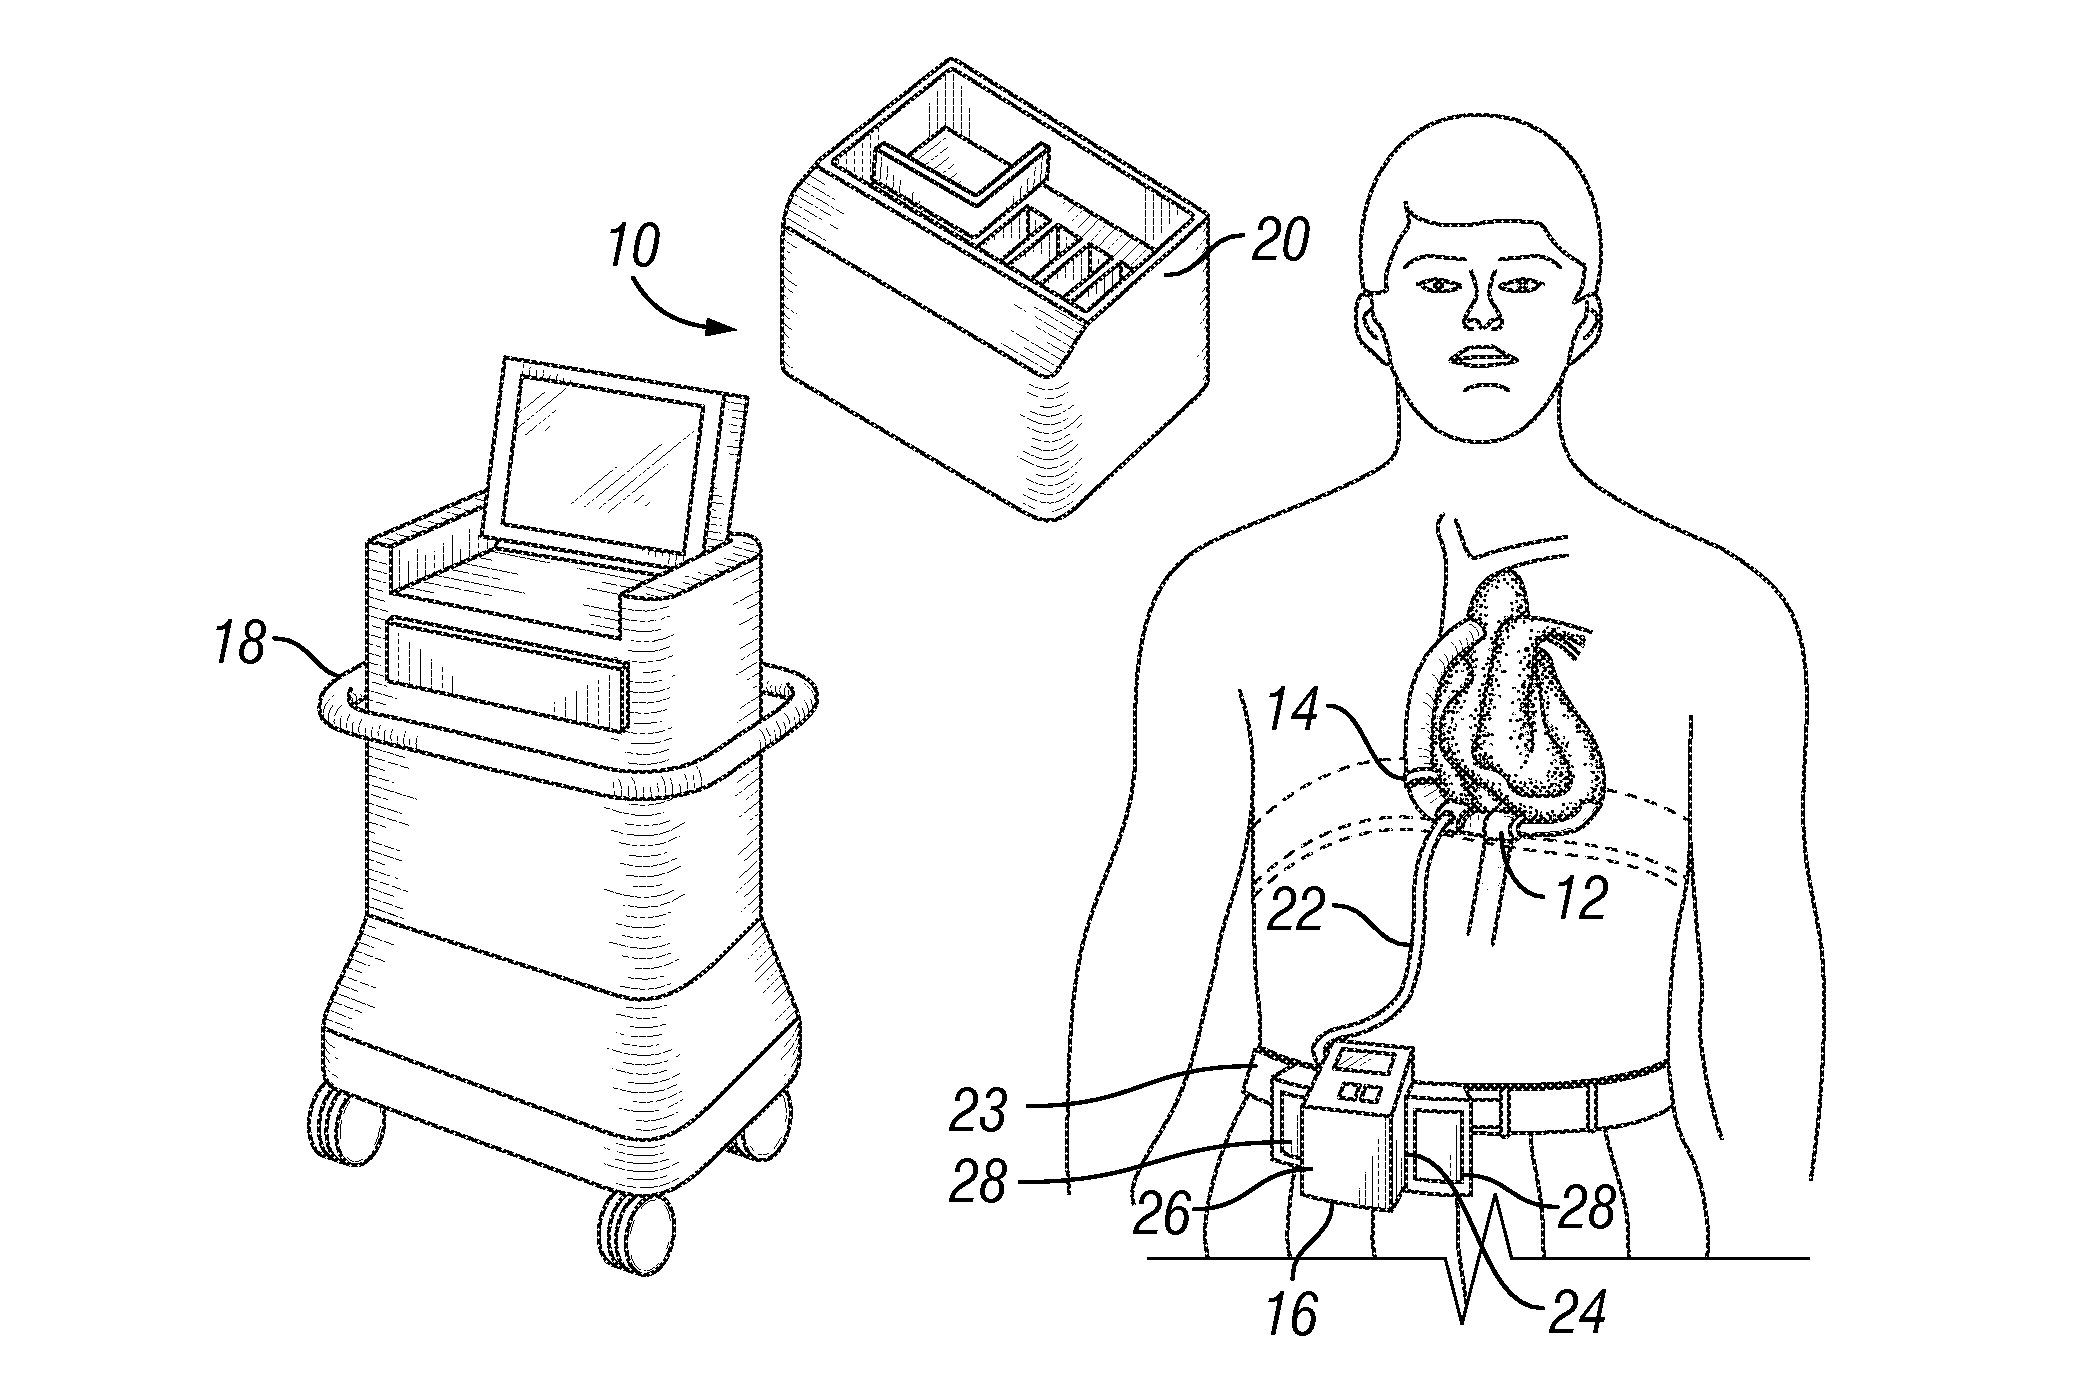 Blood pump system